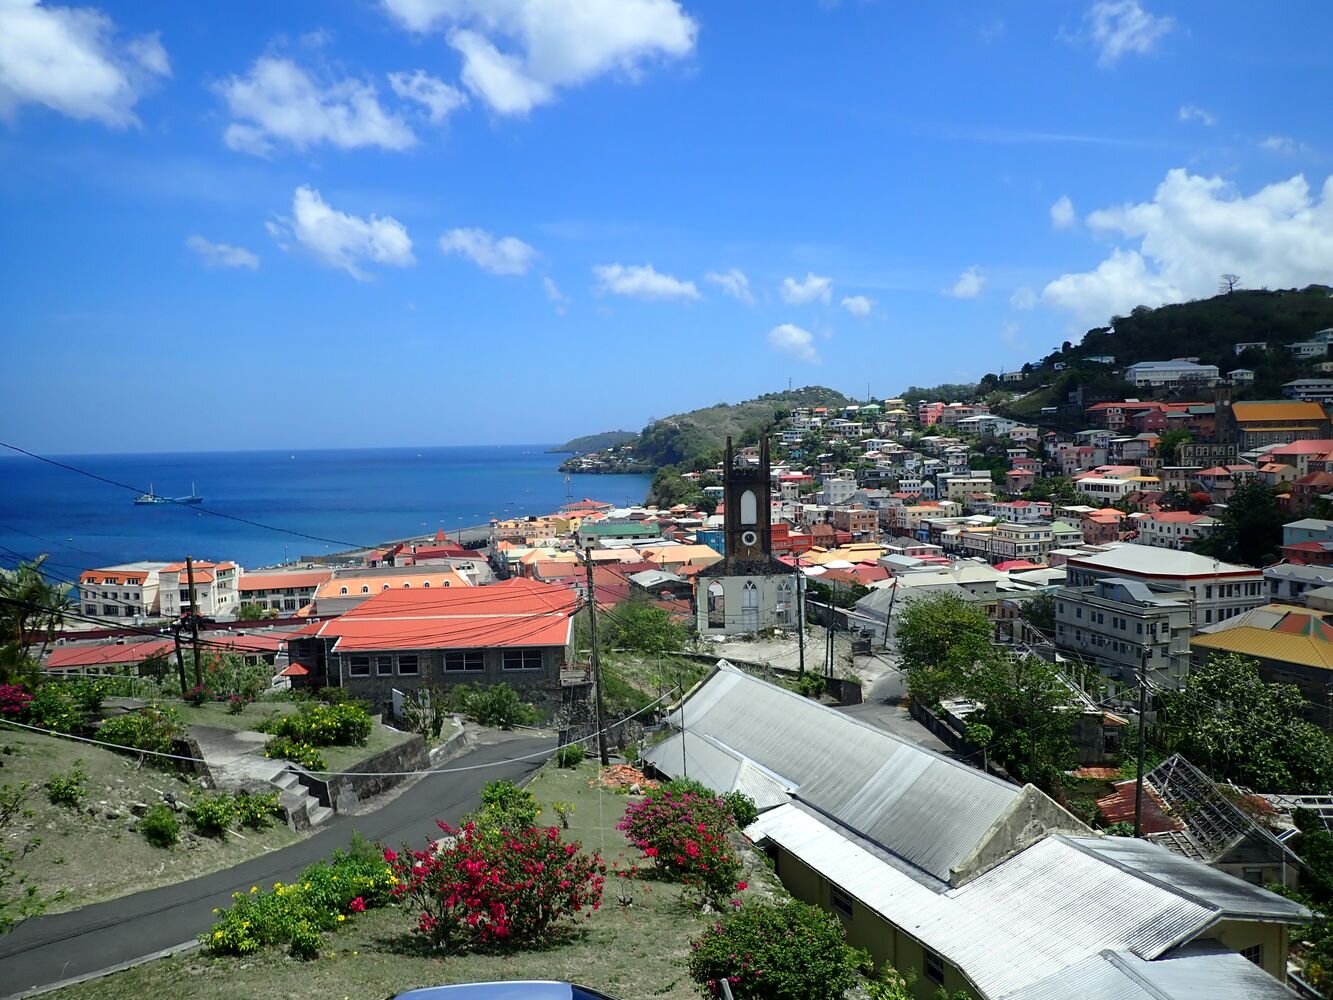 St.George's, Grenada